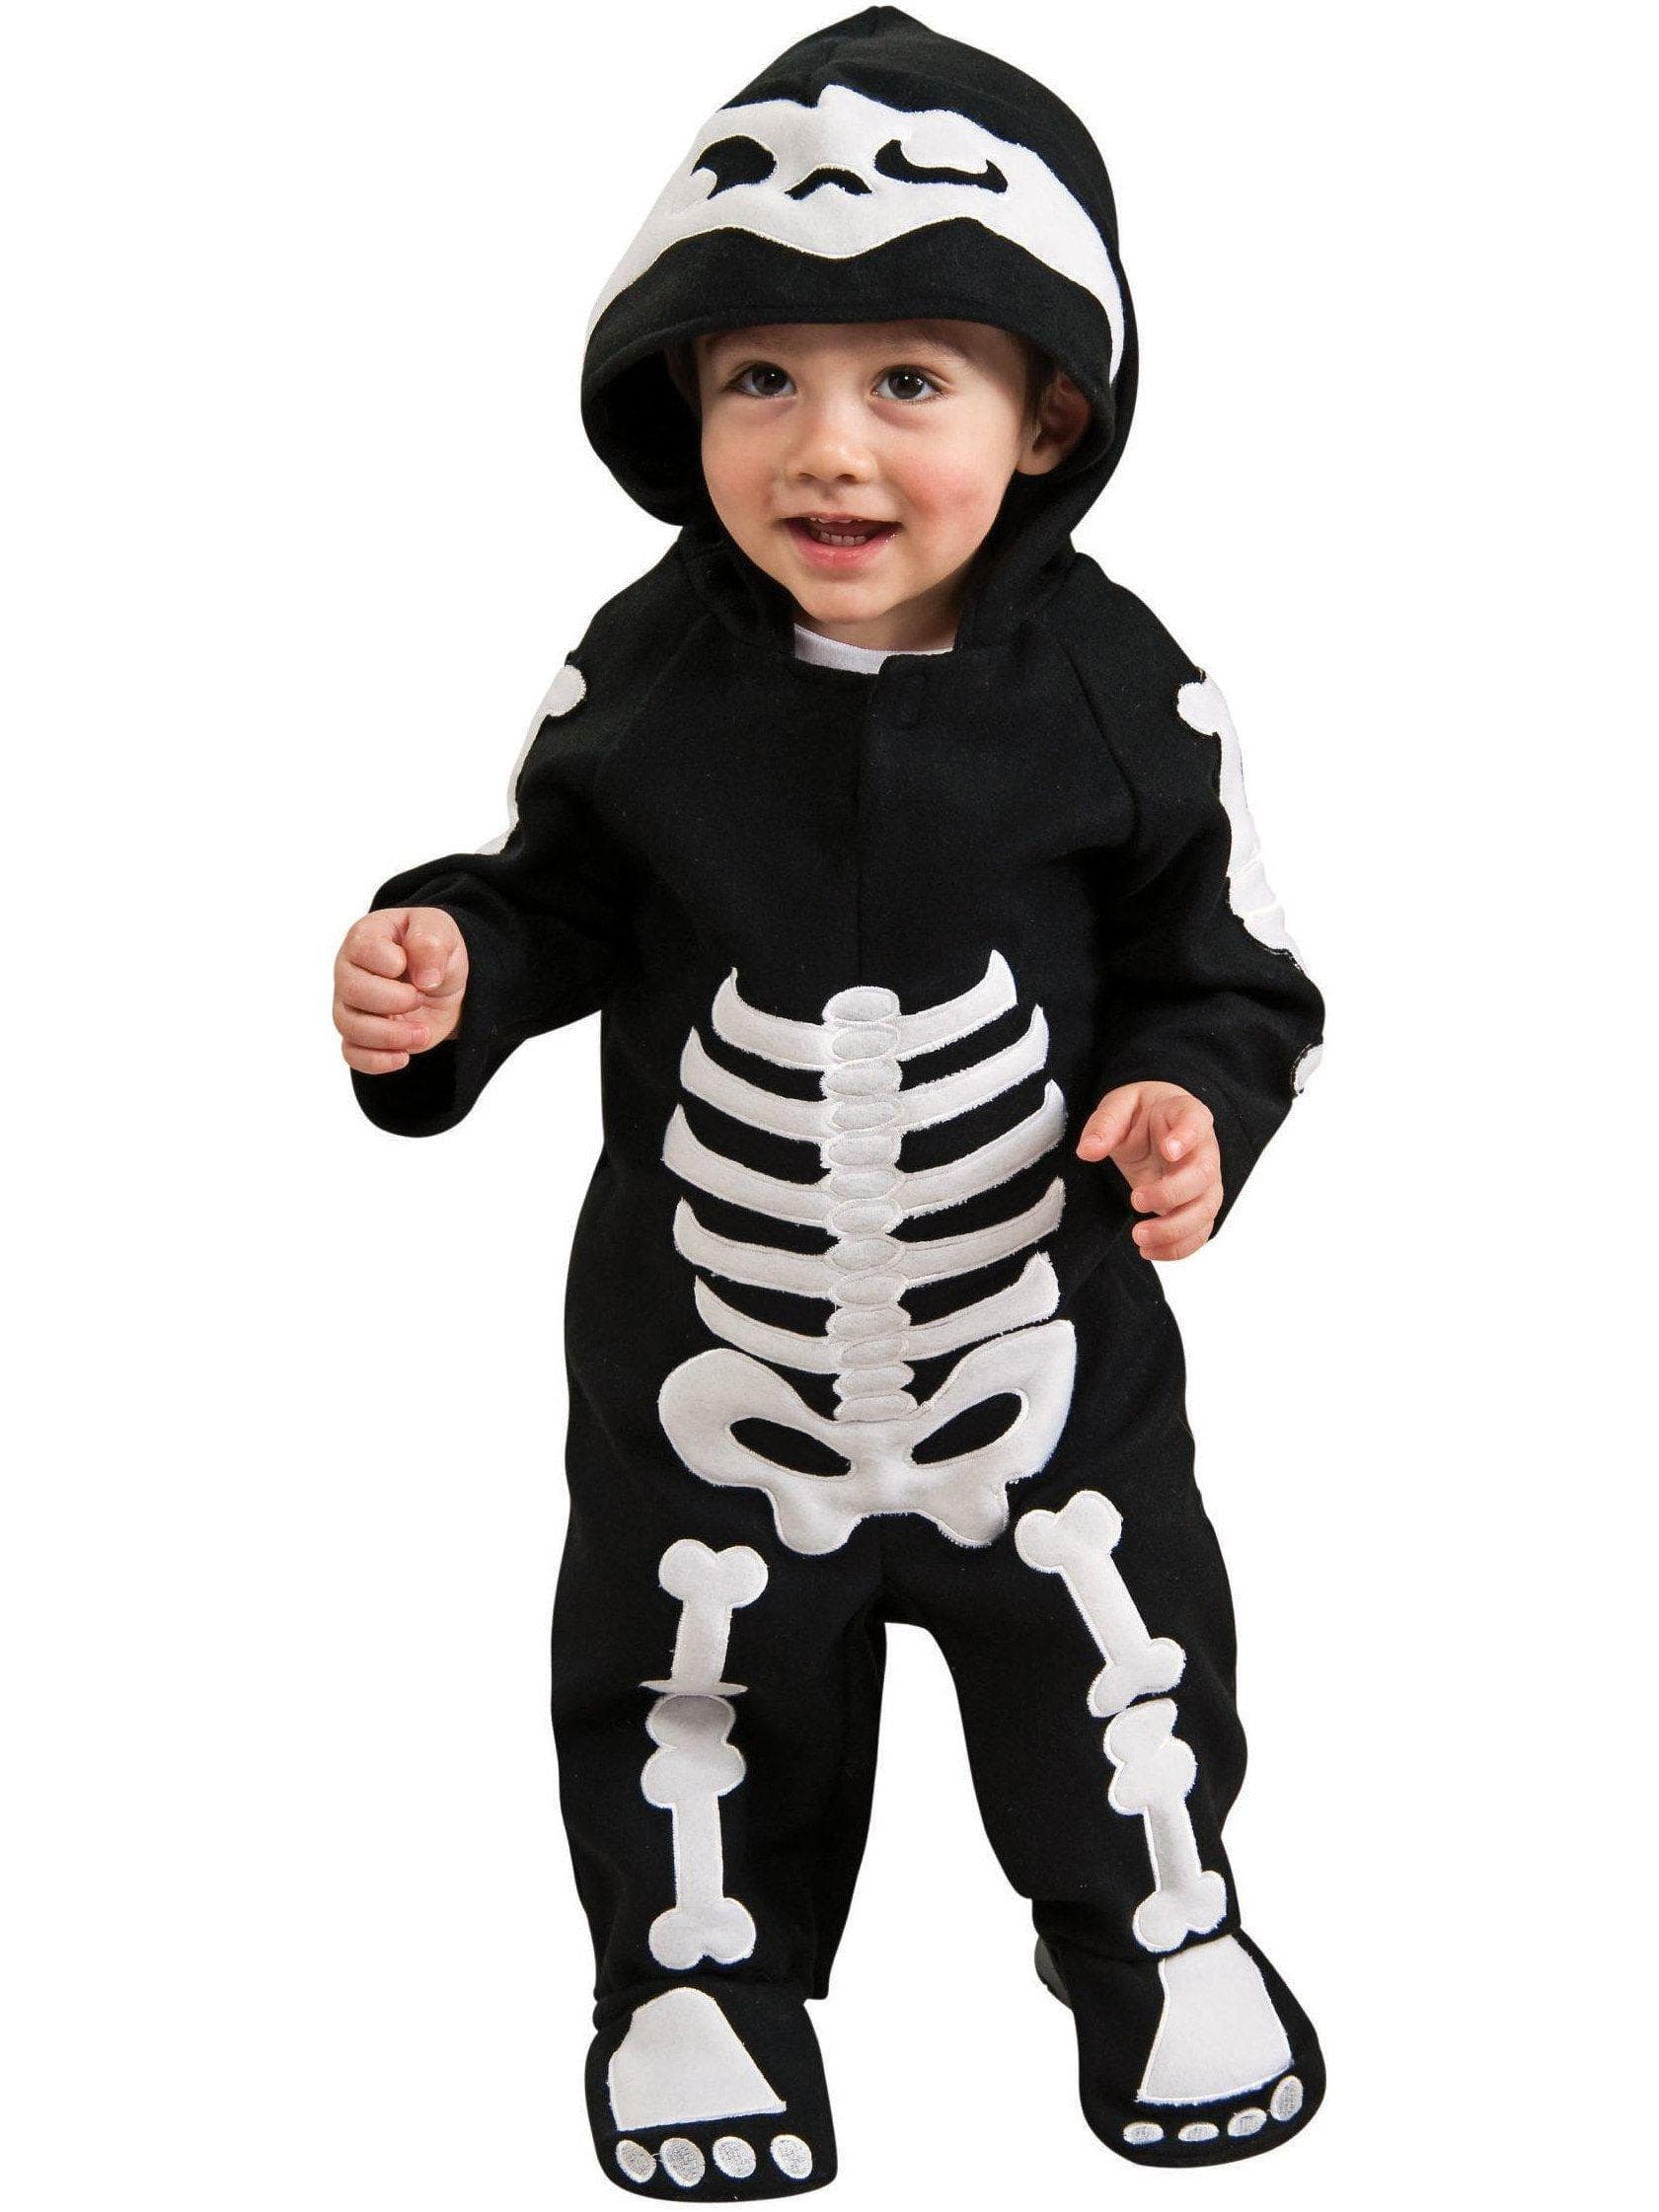 Baby/Toddler Skeleton Costume - costumes.com